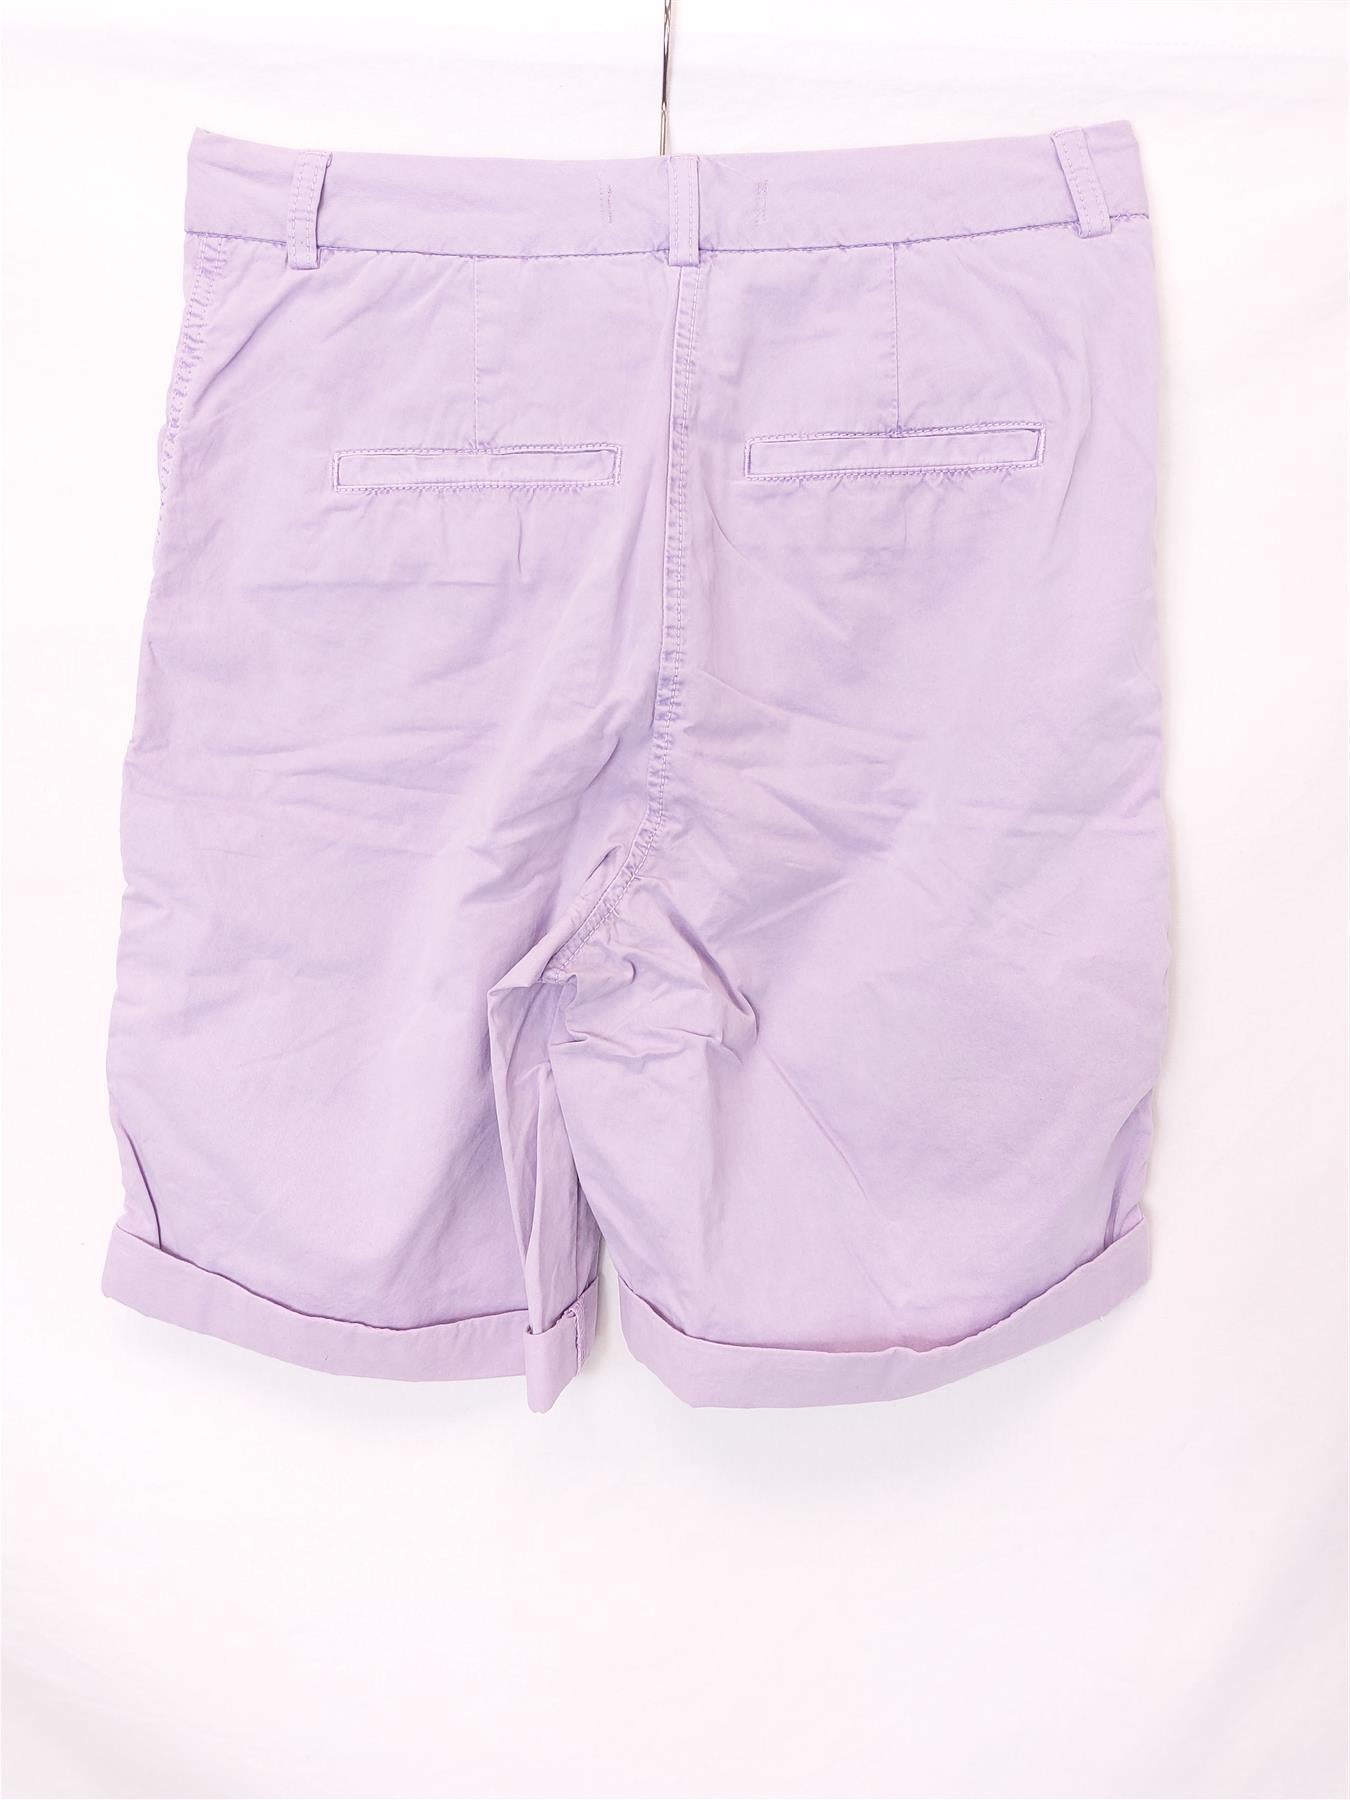 Women's Cotton Rich High Waisted Chino Shorts